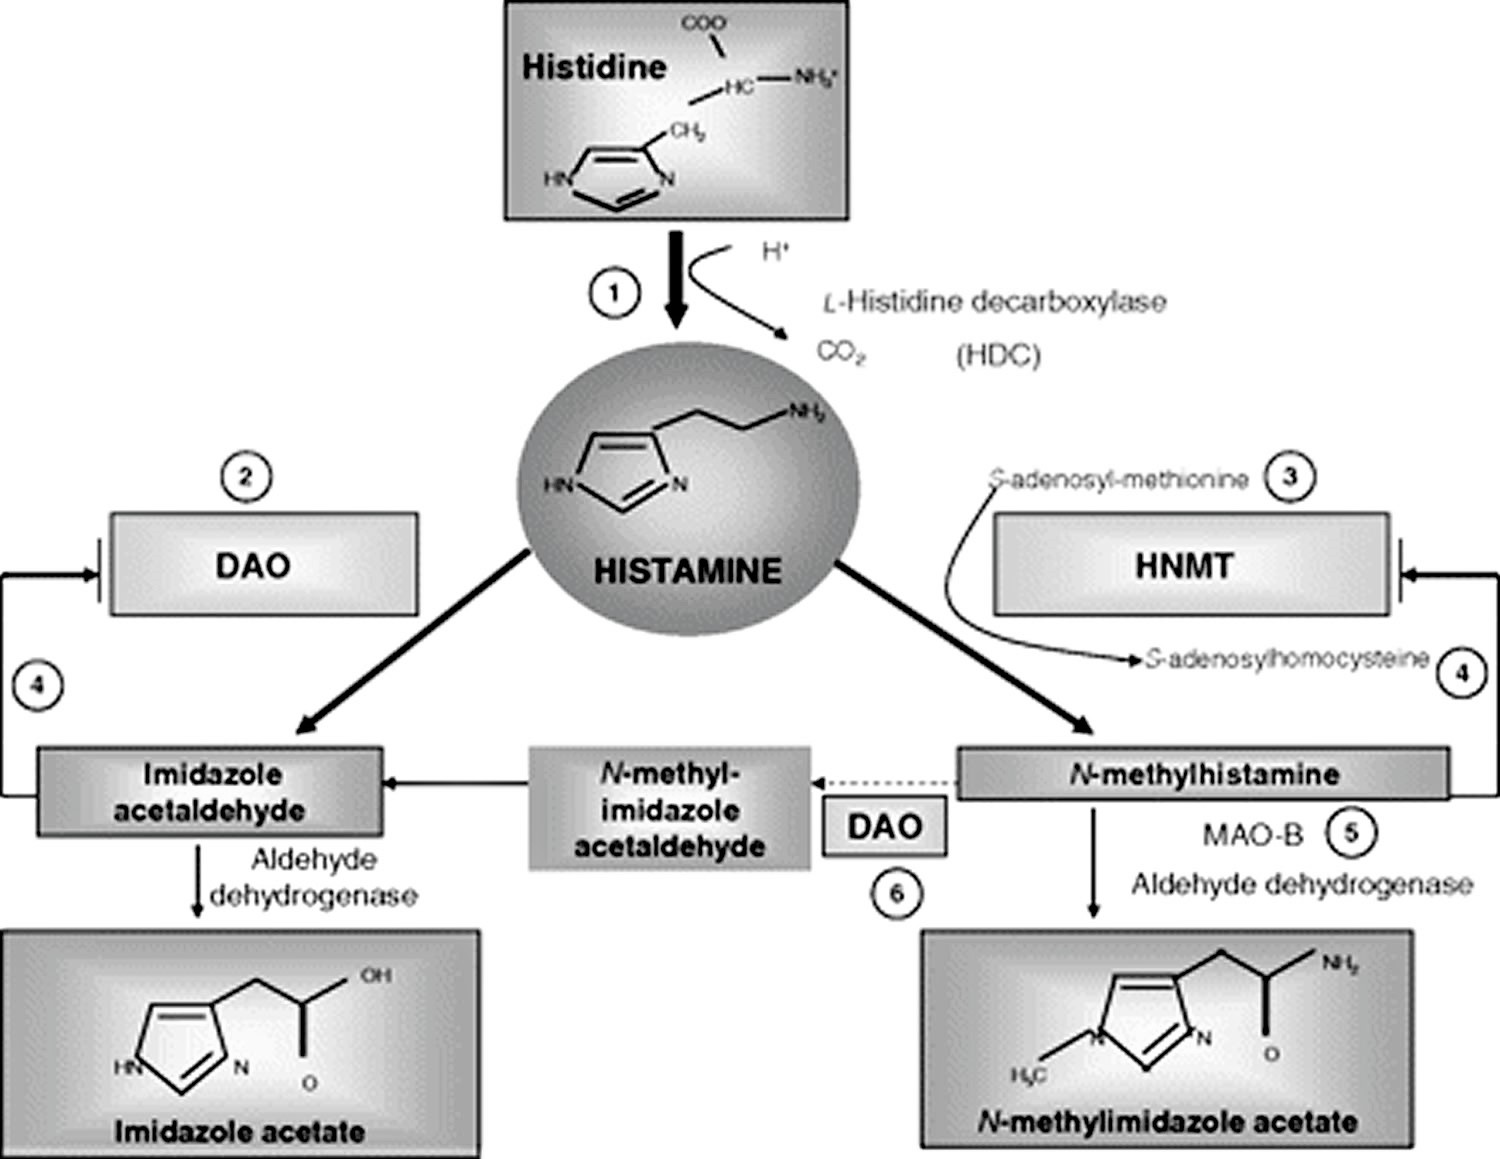 Histamine metabolism